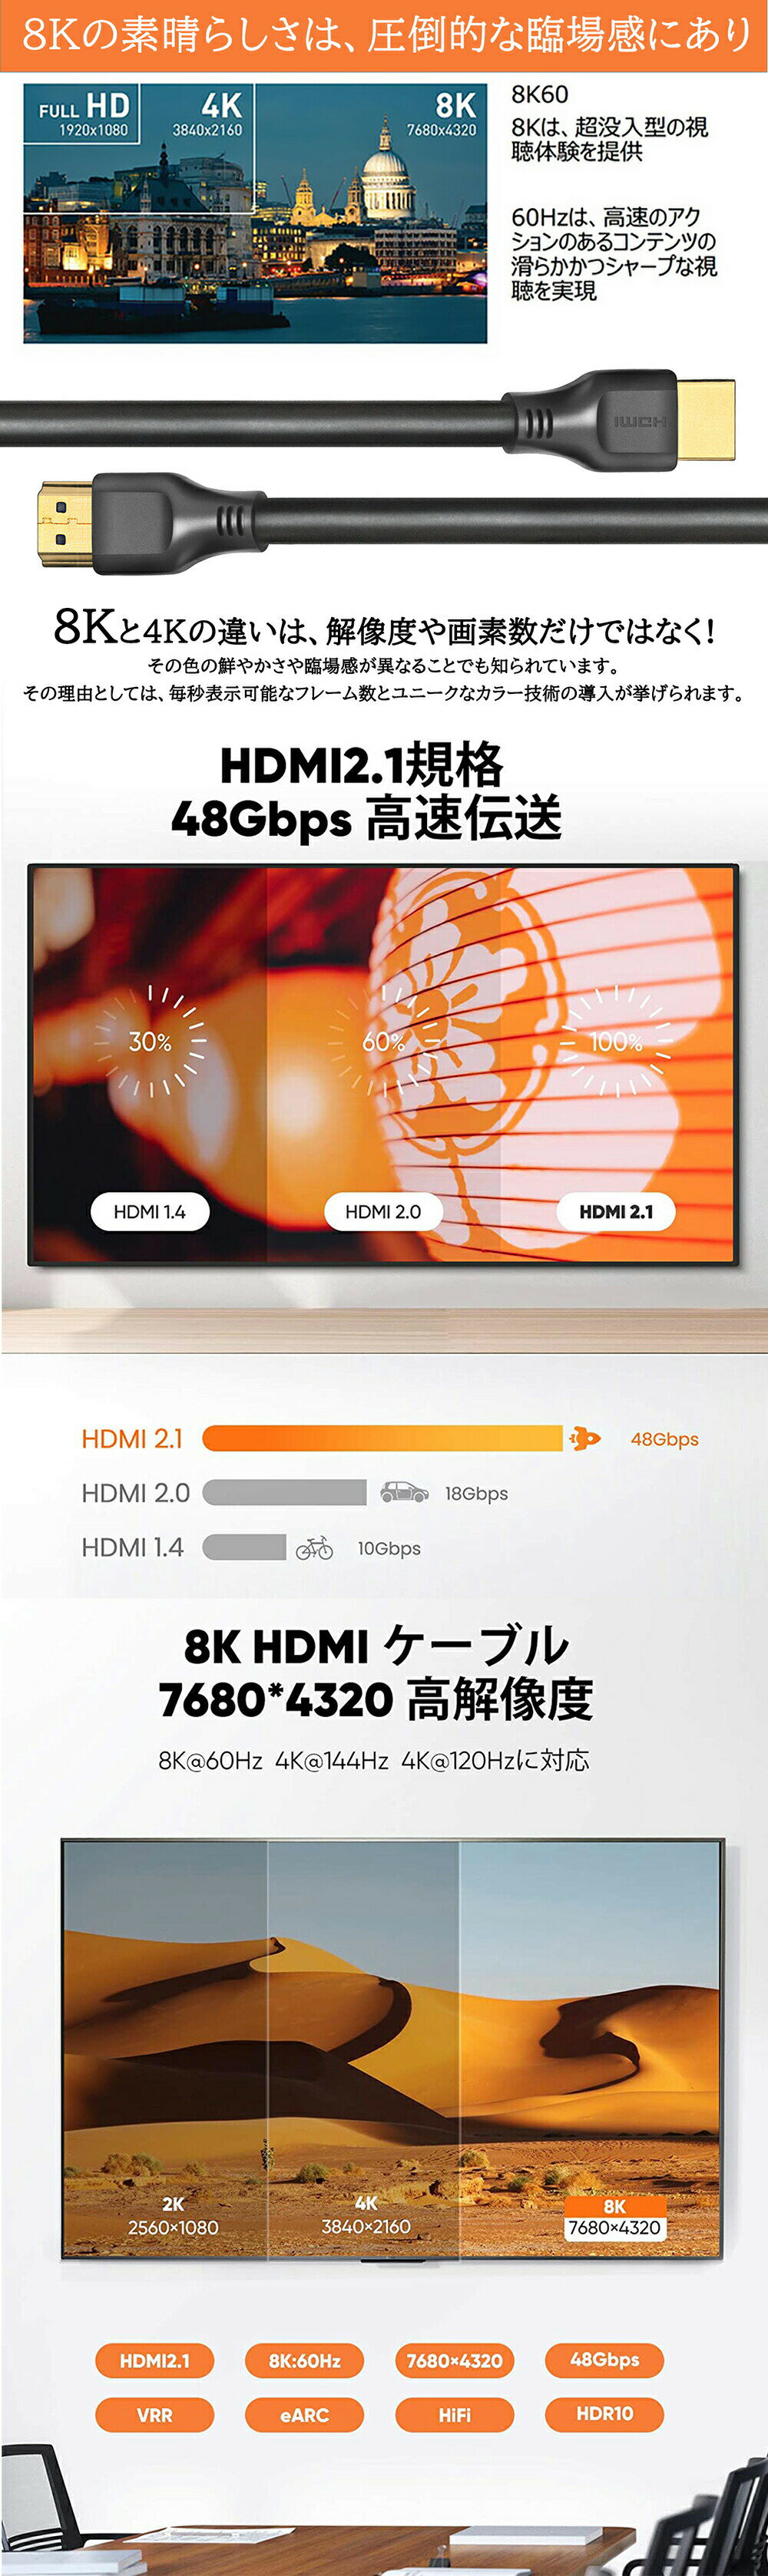 858shop HDMI 2.1 ケーブル 2m 8K(60Hz) 4K(120